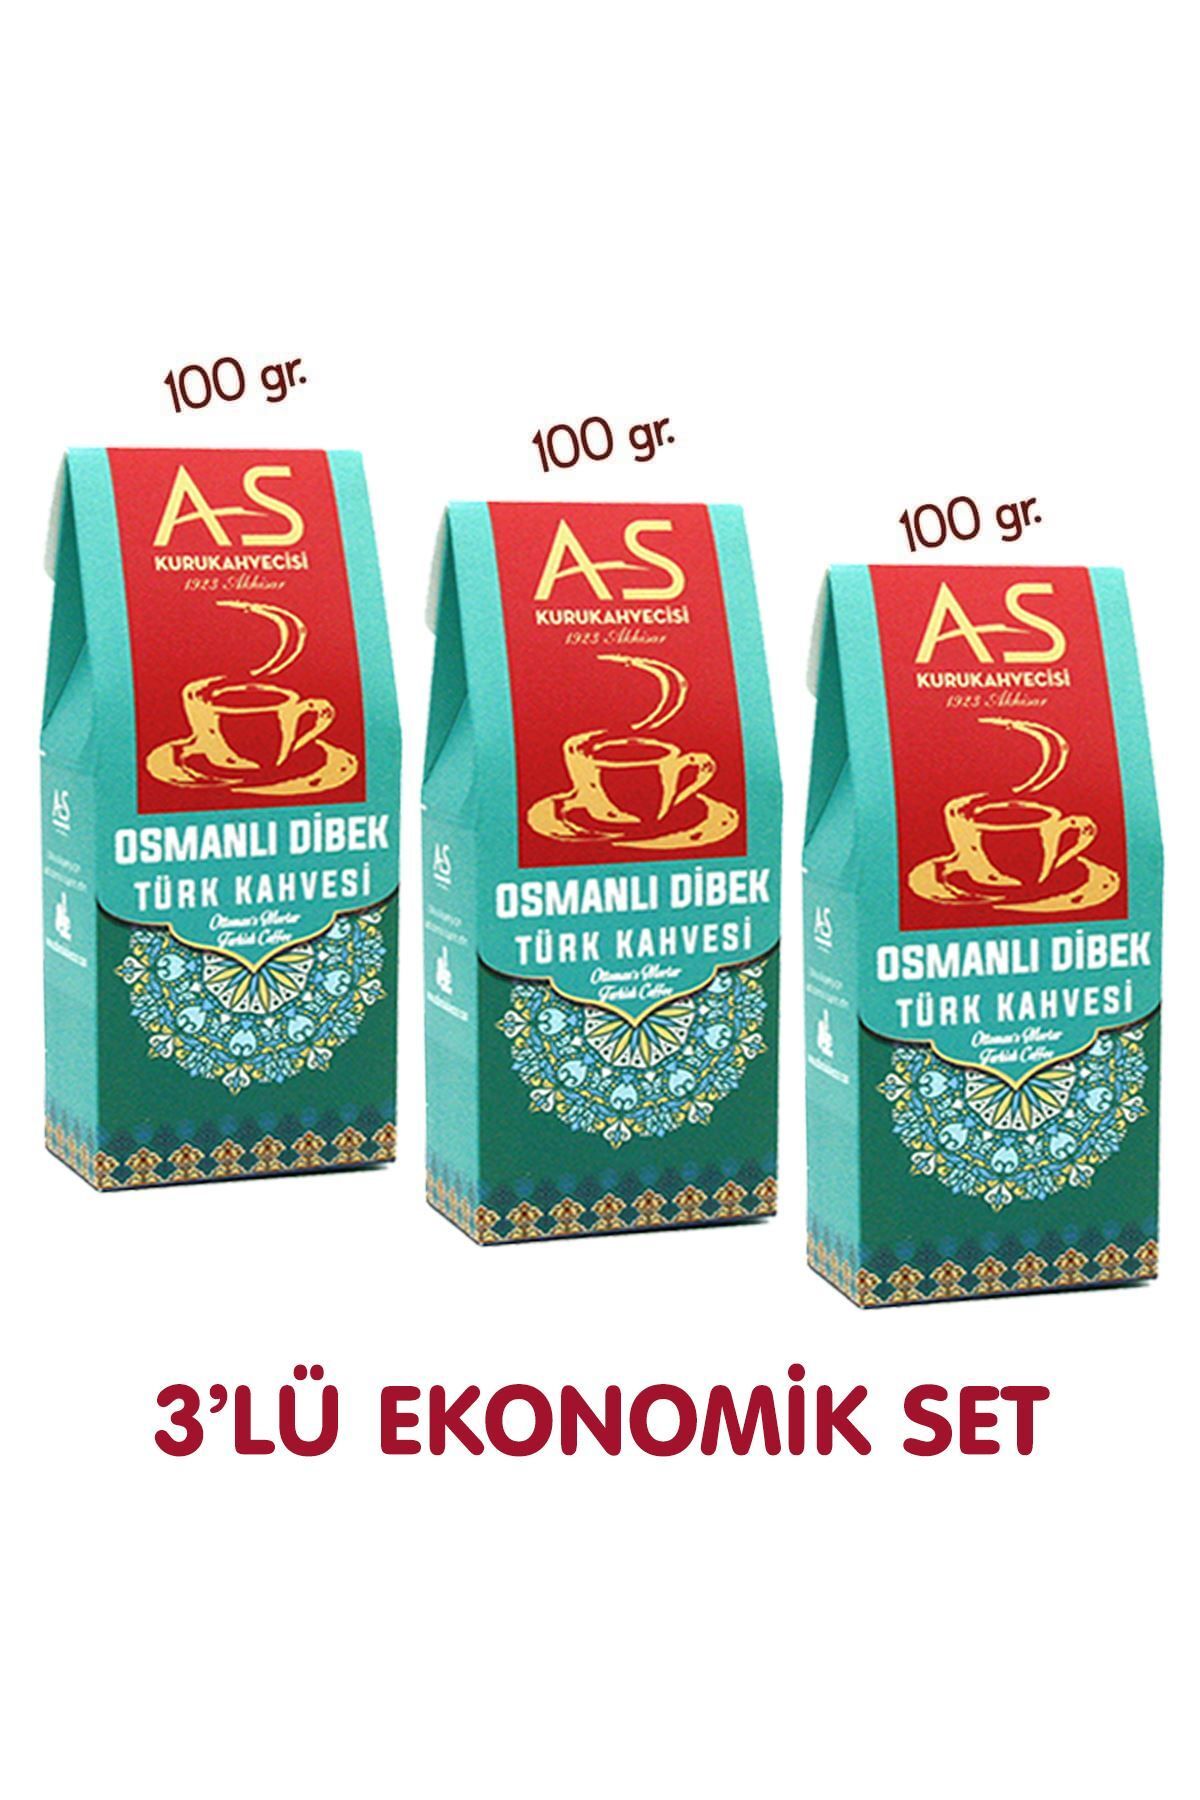 AS Kurukahvecisi 3'lü Dibek Türk Kahvesi Ekonomik Set